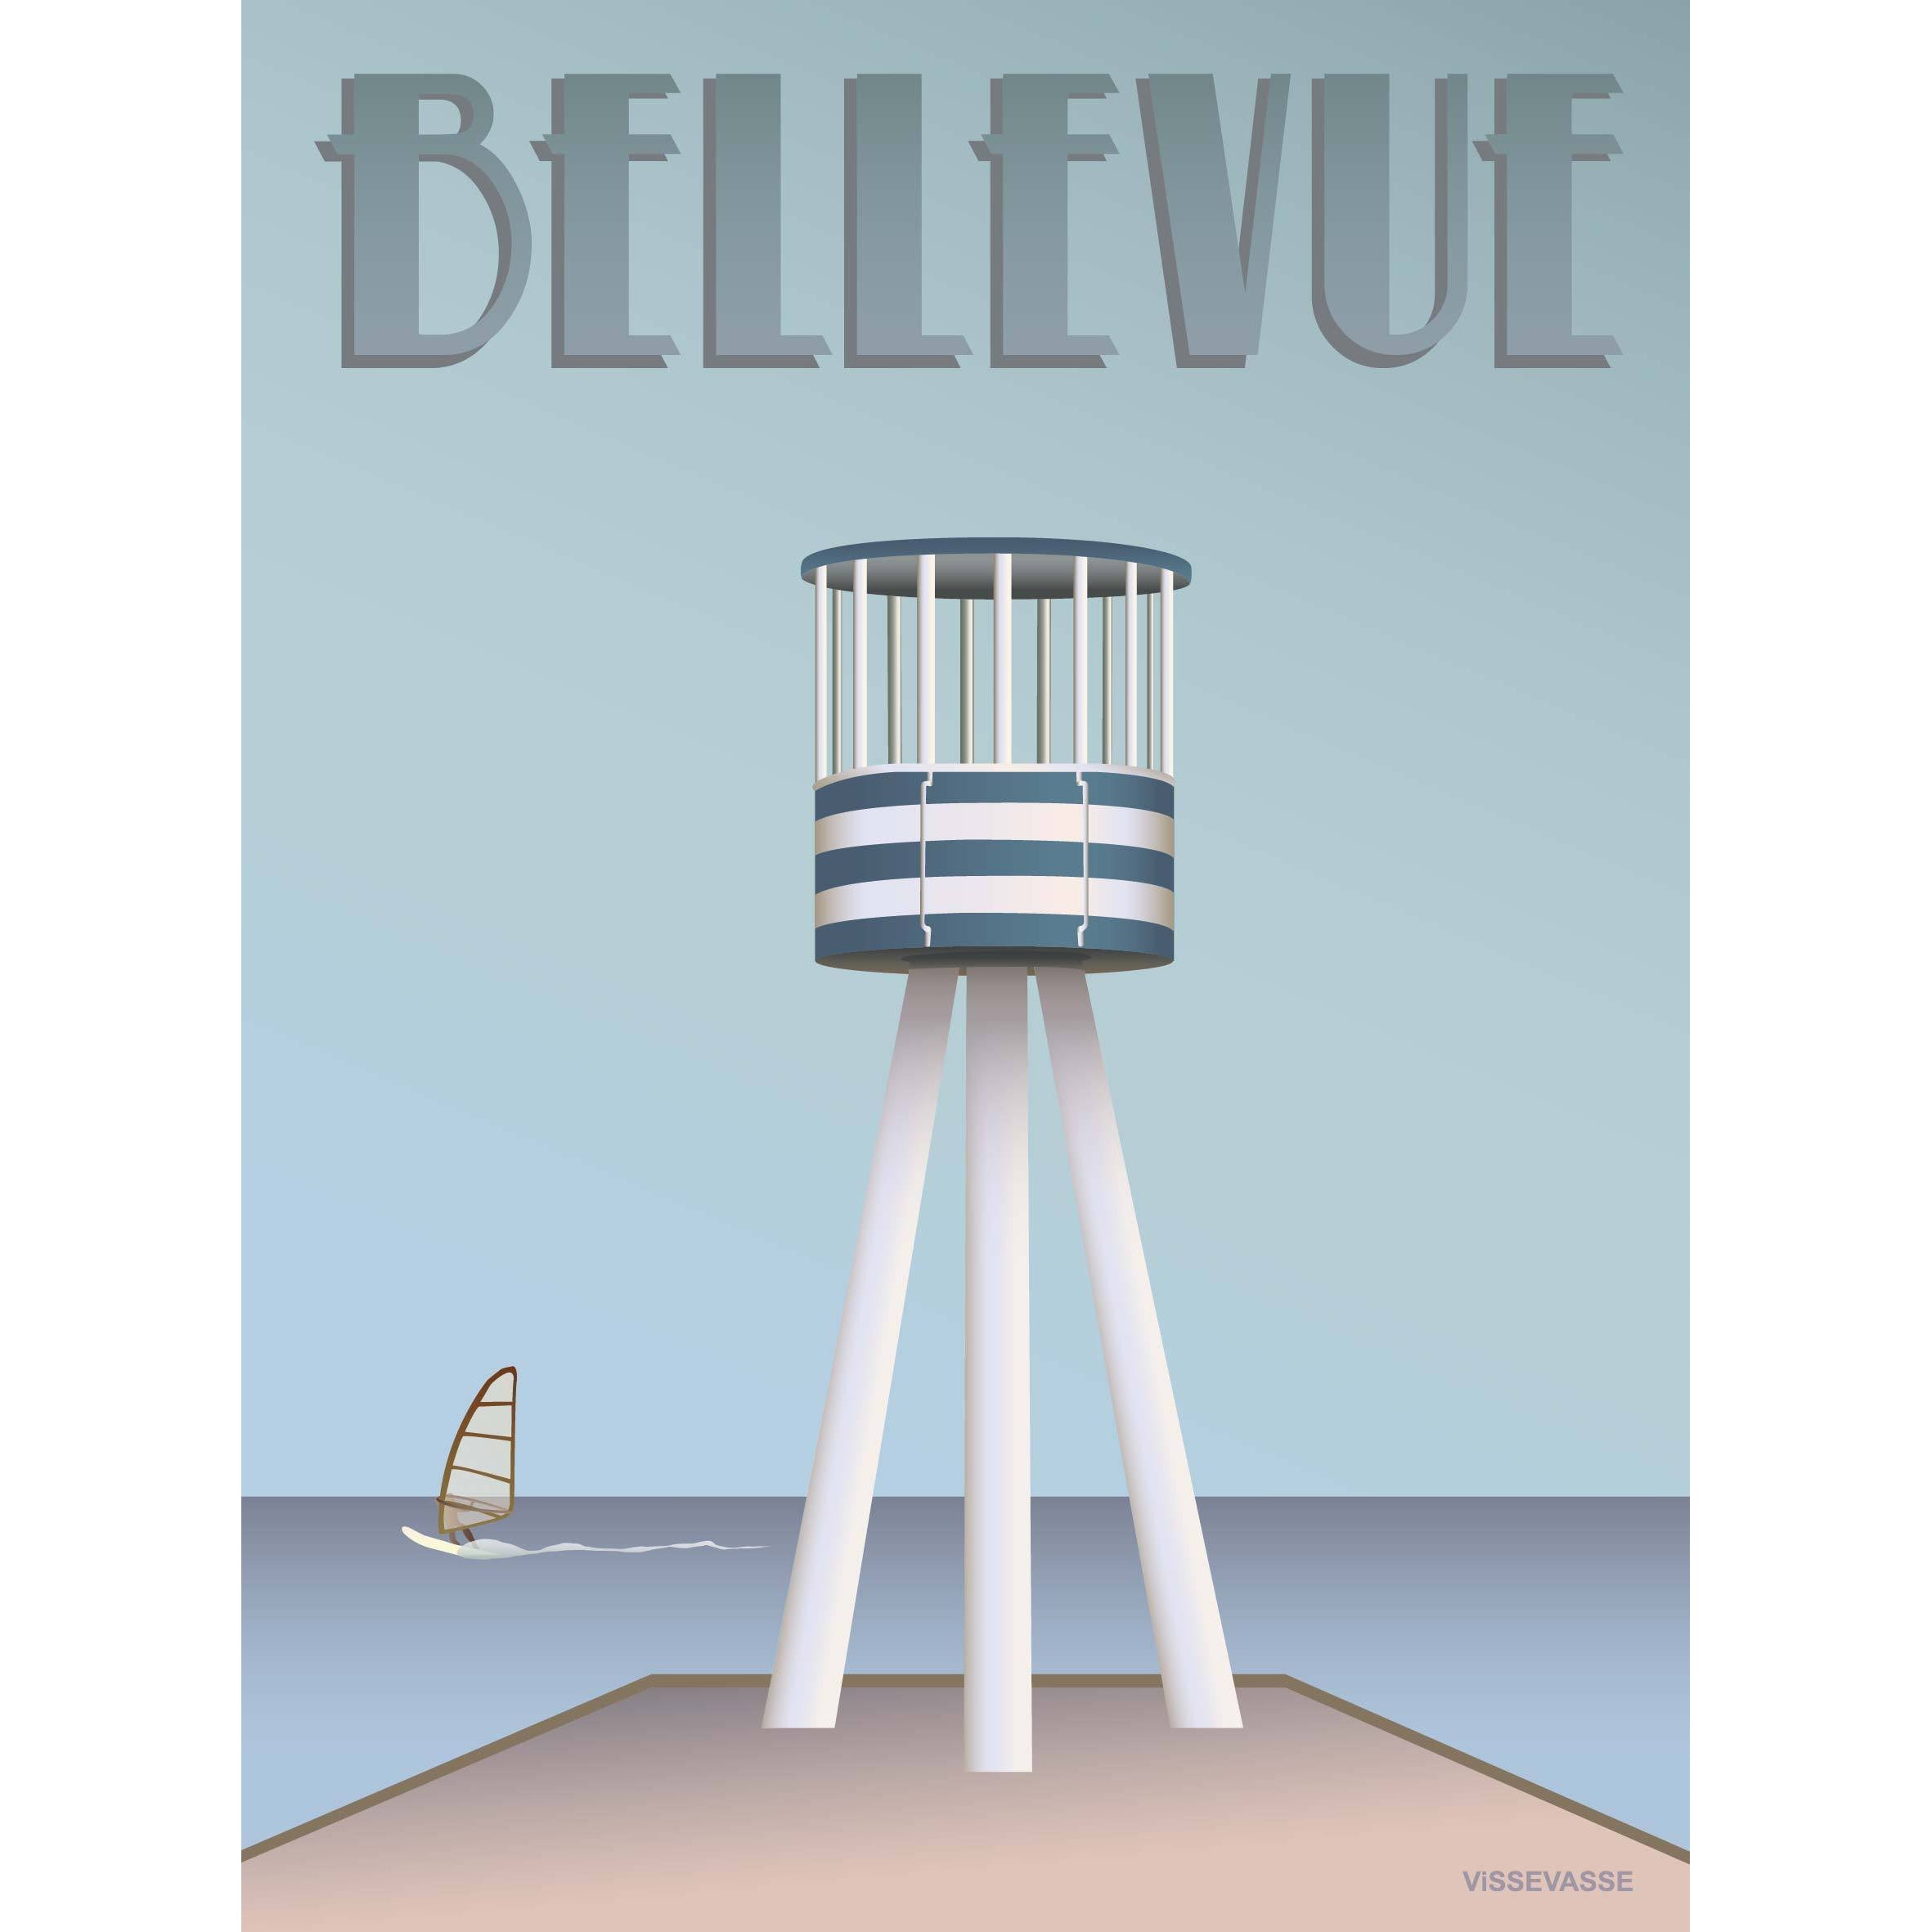 Vissevasse Bellevue Lifeguard Tower -affisch, 15 x21 cm